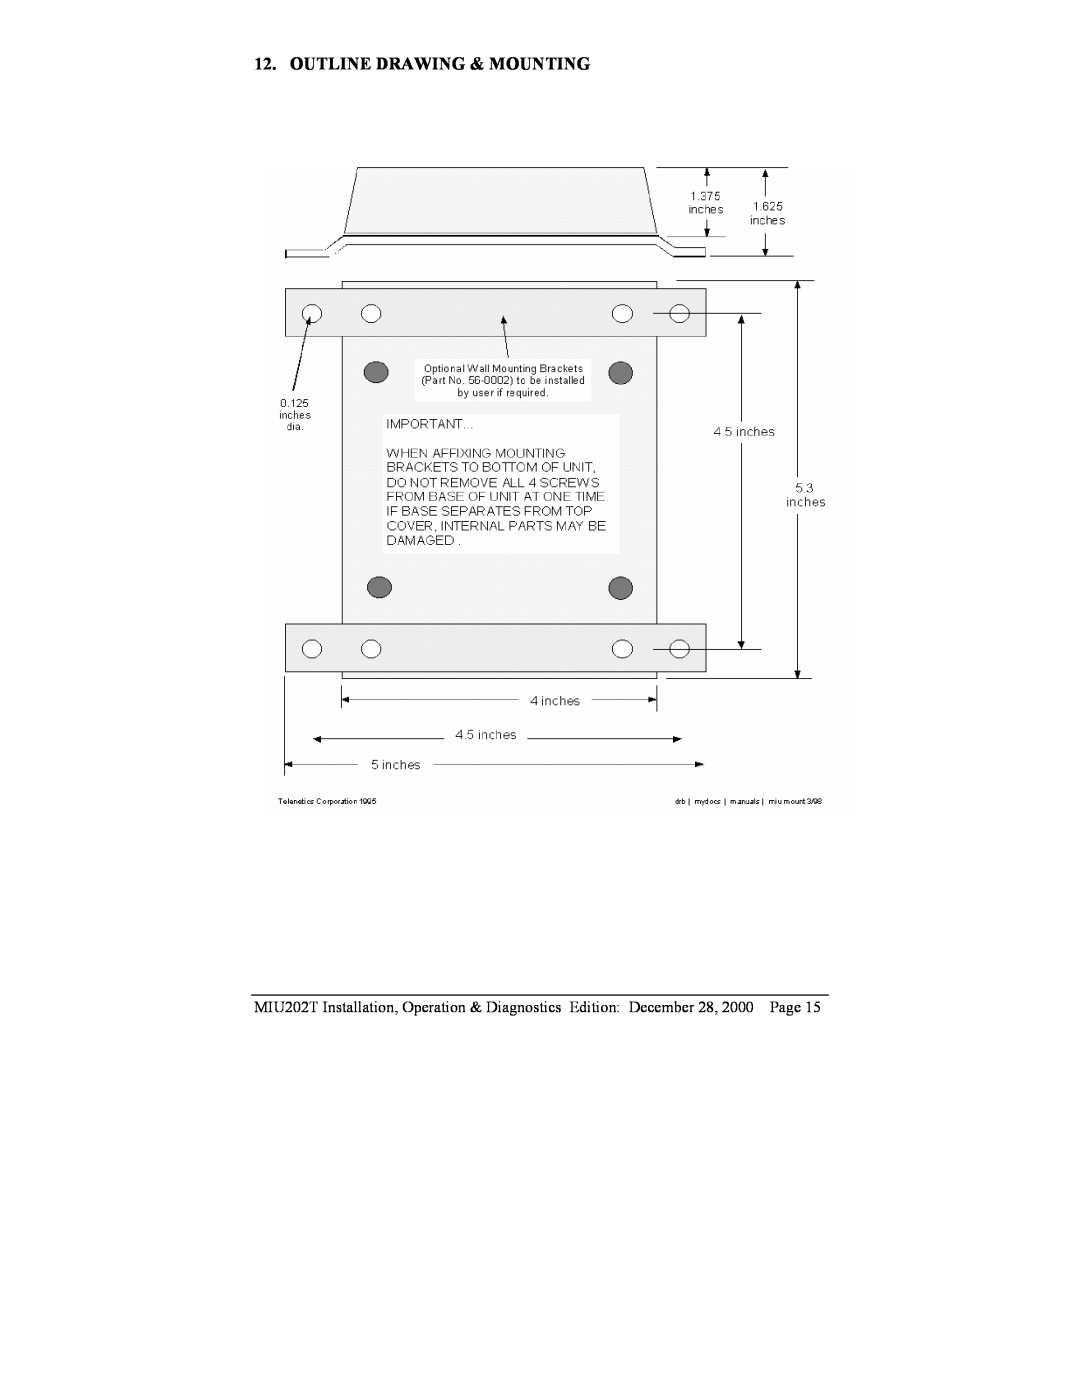 Telenetics MIU202T Modem manual Outline Drawing & Mounting 